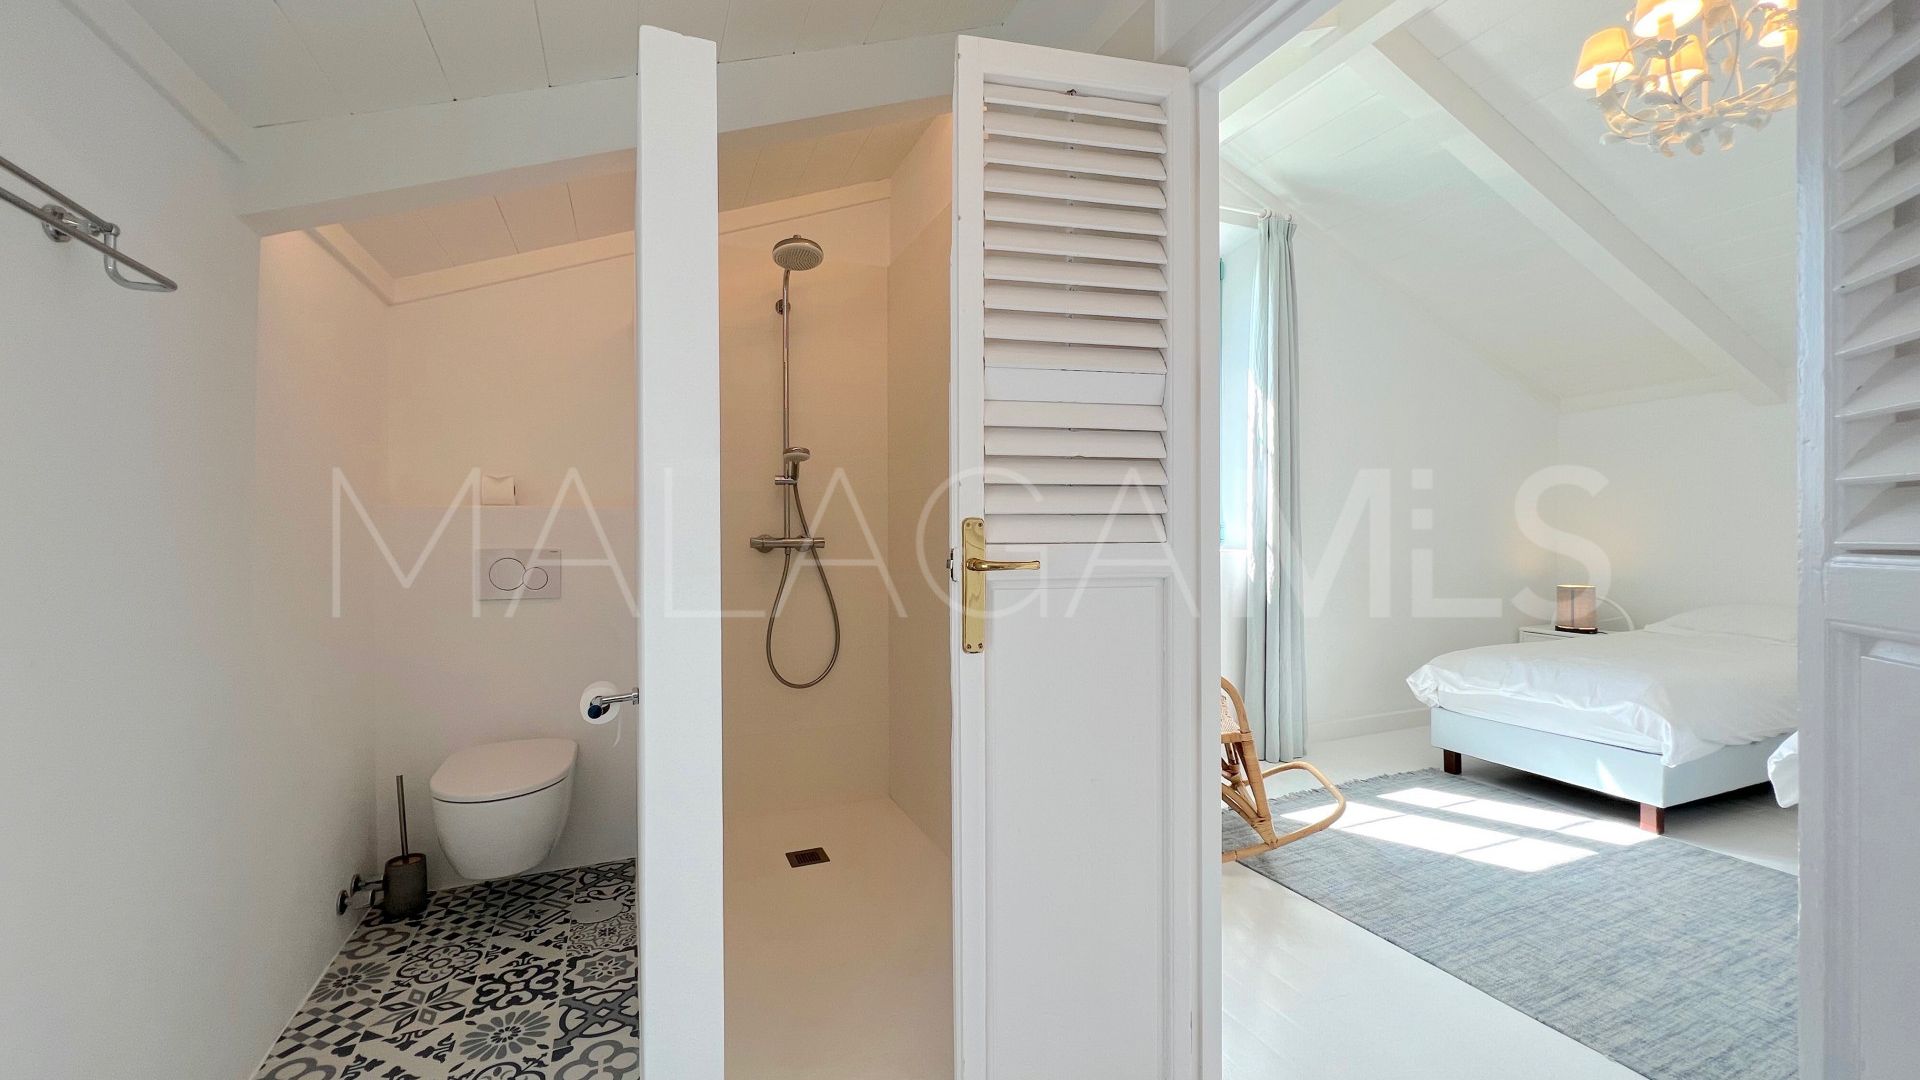 For sale villa with 5 bedrooms in Paraiso Alto